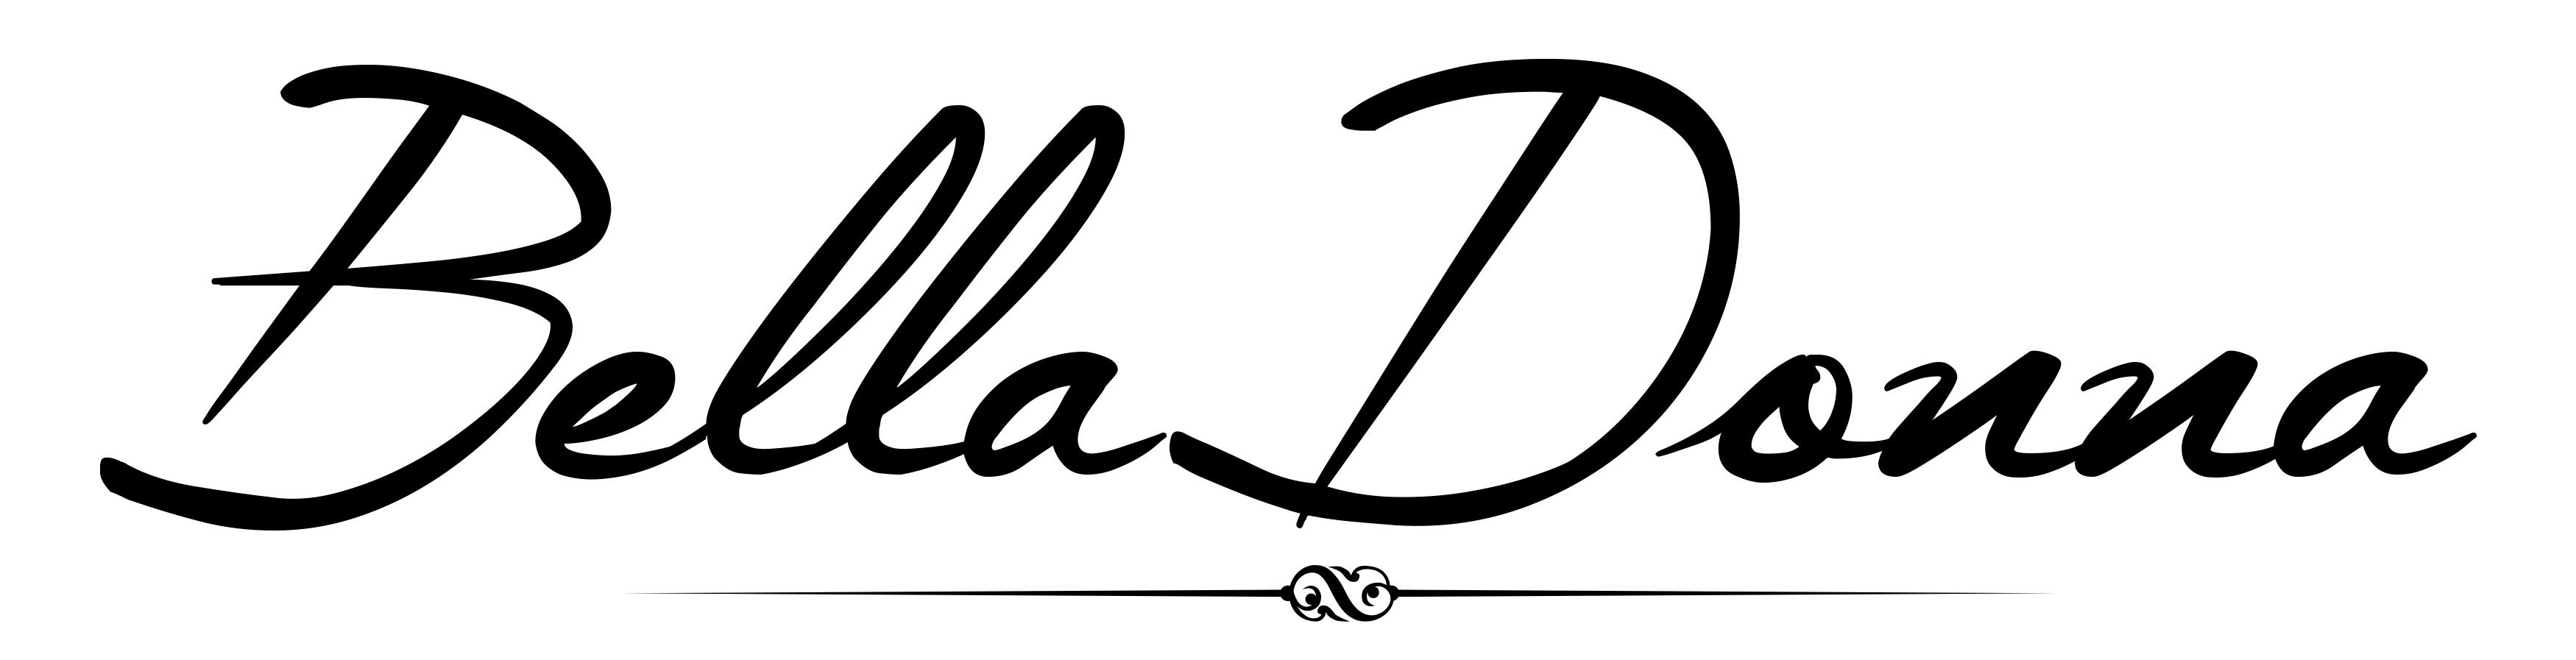 BellaDonna Designs Logo